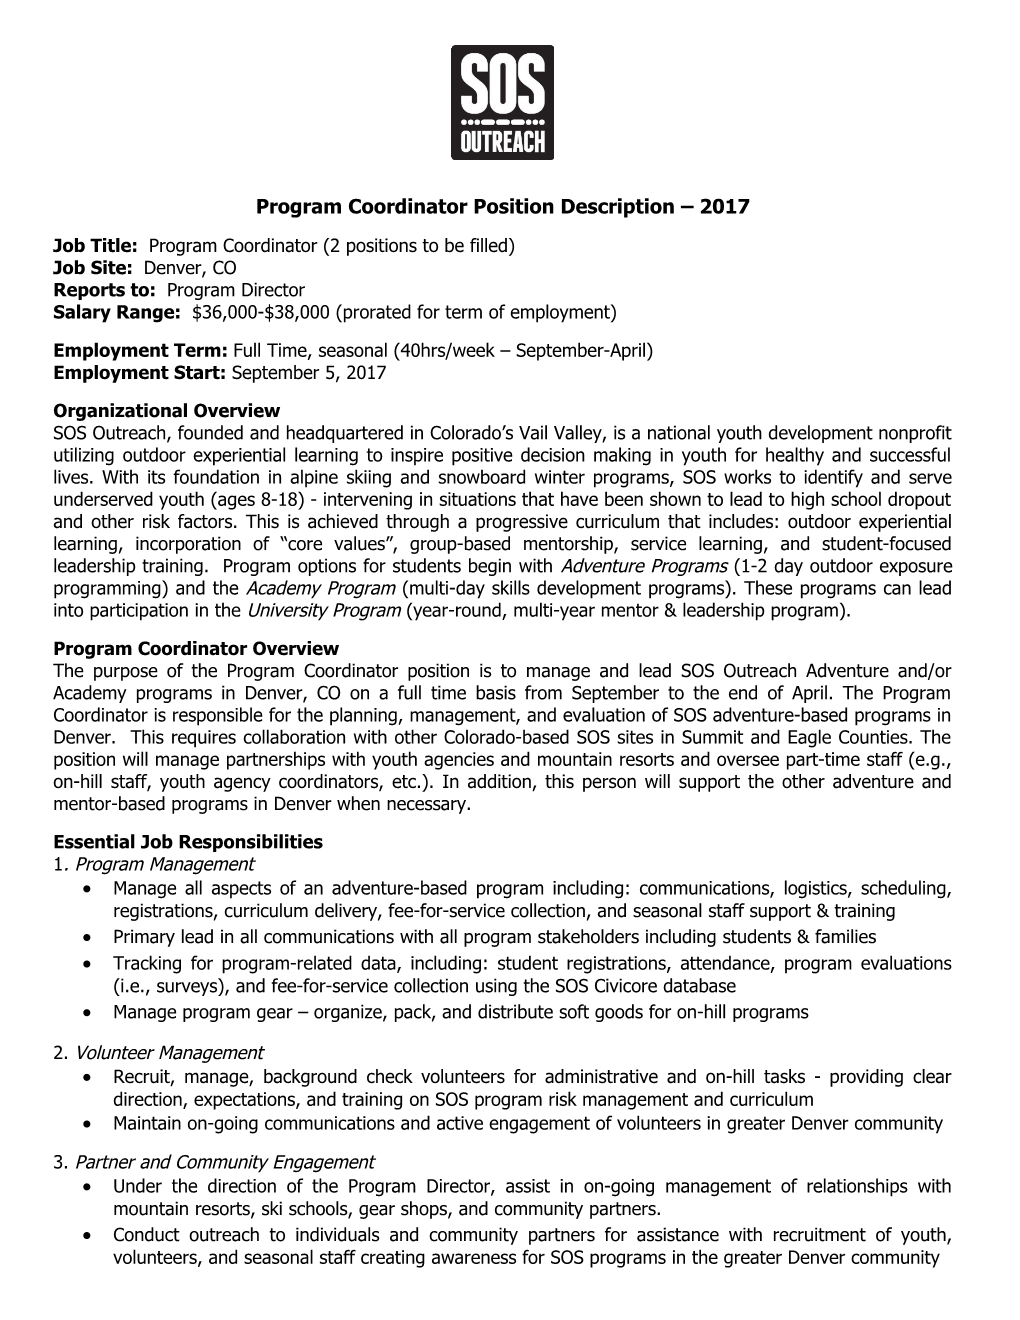 Program Coordinator Position Description 2017